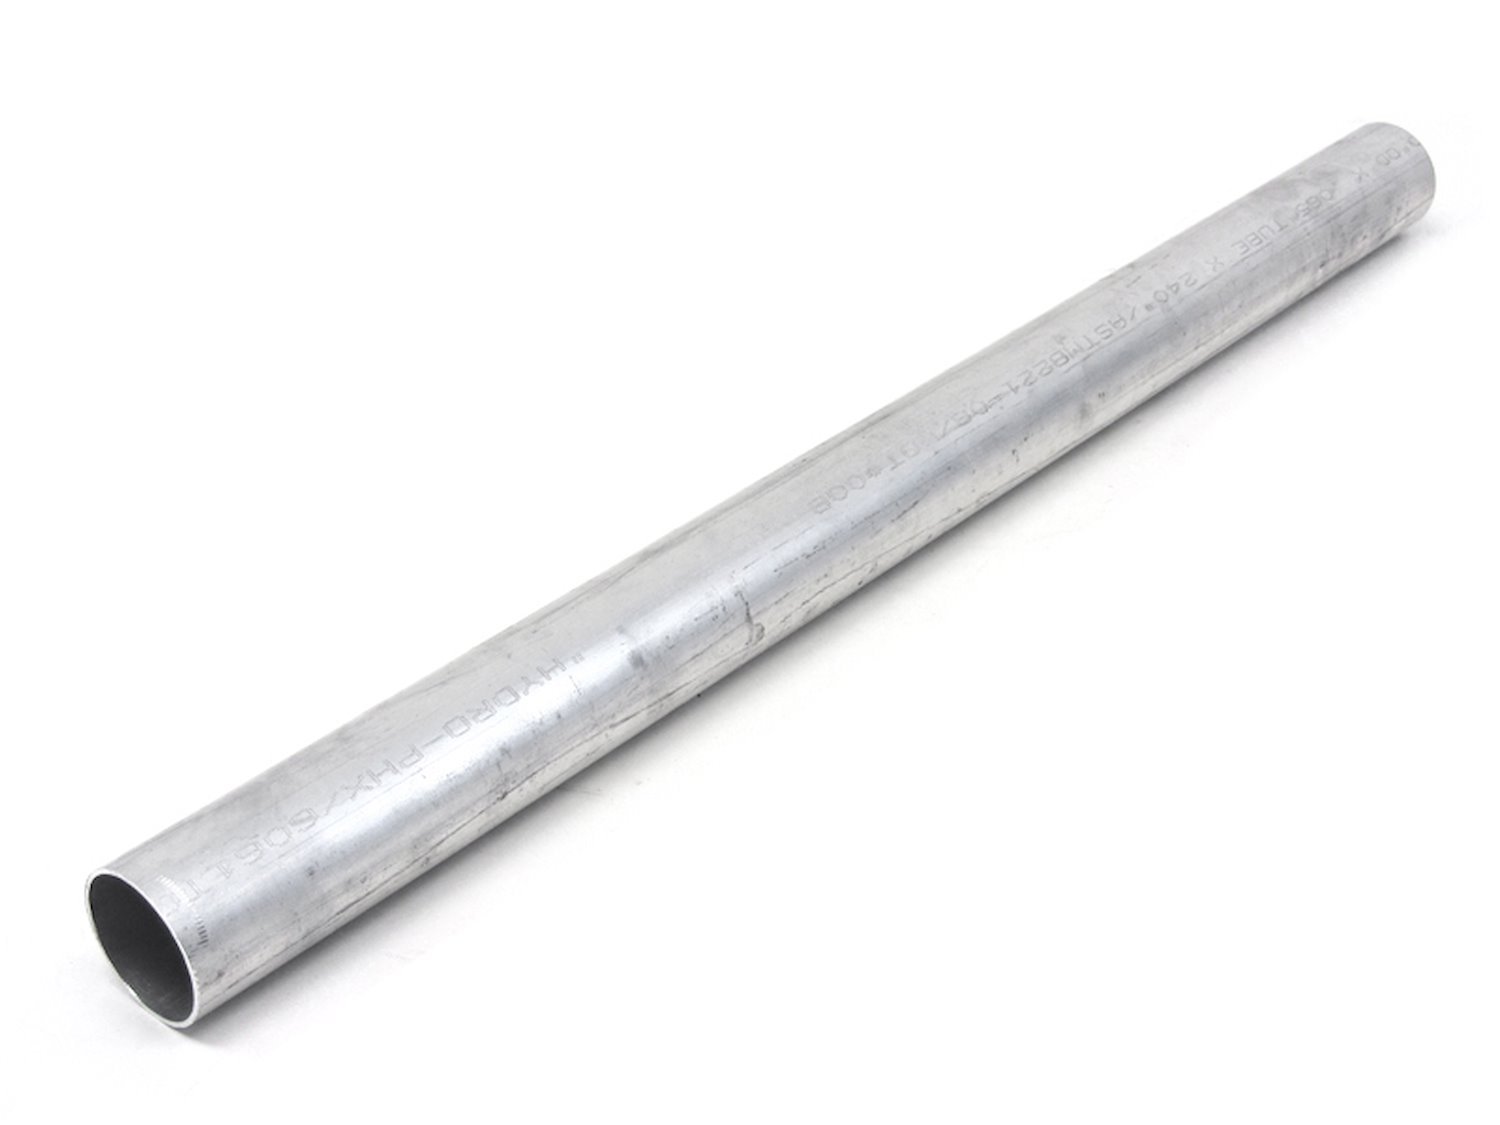 AST-2F-038 Aluminum Tubing, 6061 Aluminum, Straight Tubing, 3/8 in. OD, Seamless, Raw Finish, 2 ft. Long